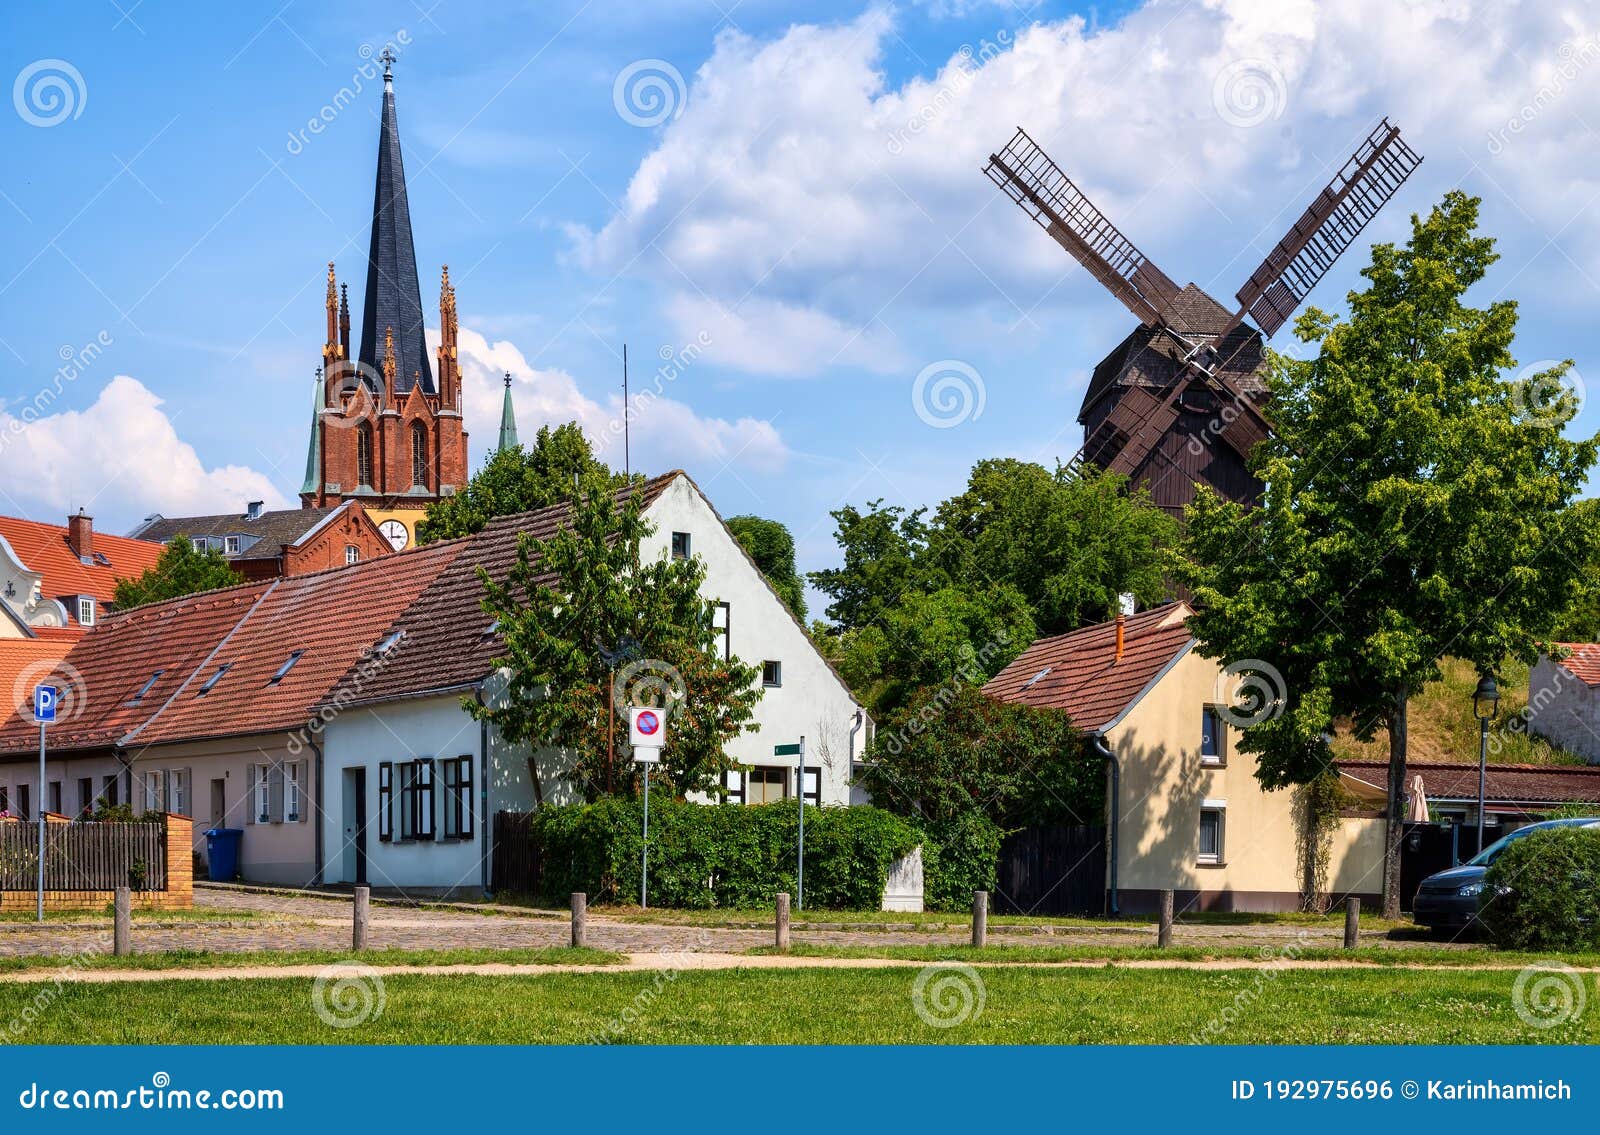 werder on havel, with holy spirit church -heilig geist kirche- and bock windmill -bockwindmÃÂ¼hle- , potsdam, germany